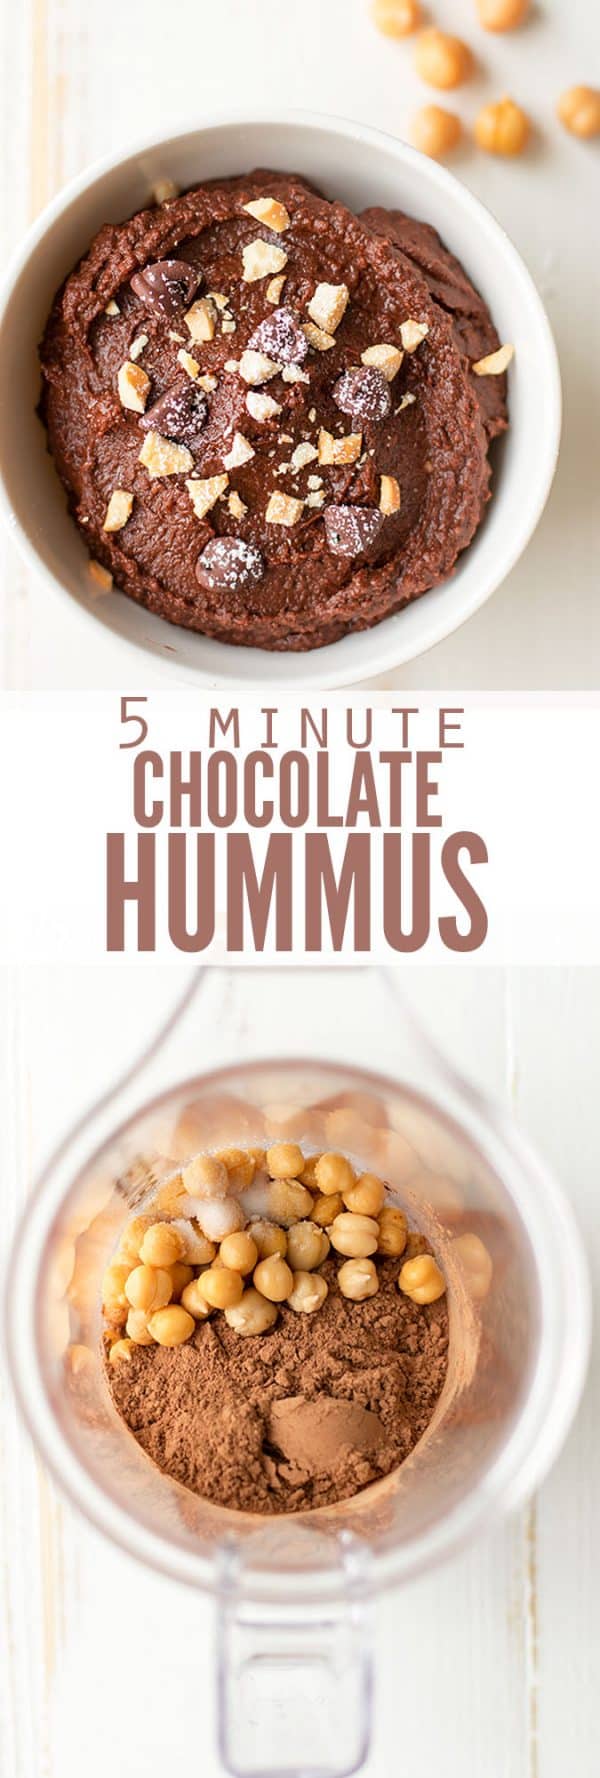 Chocolate Hummus | 5 Minute Recipe Using Beans + Video